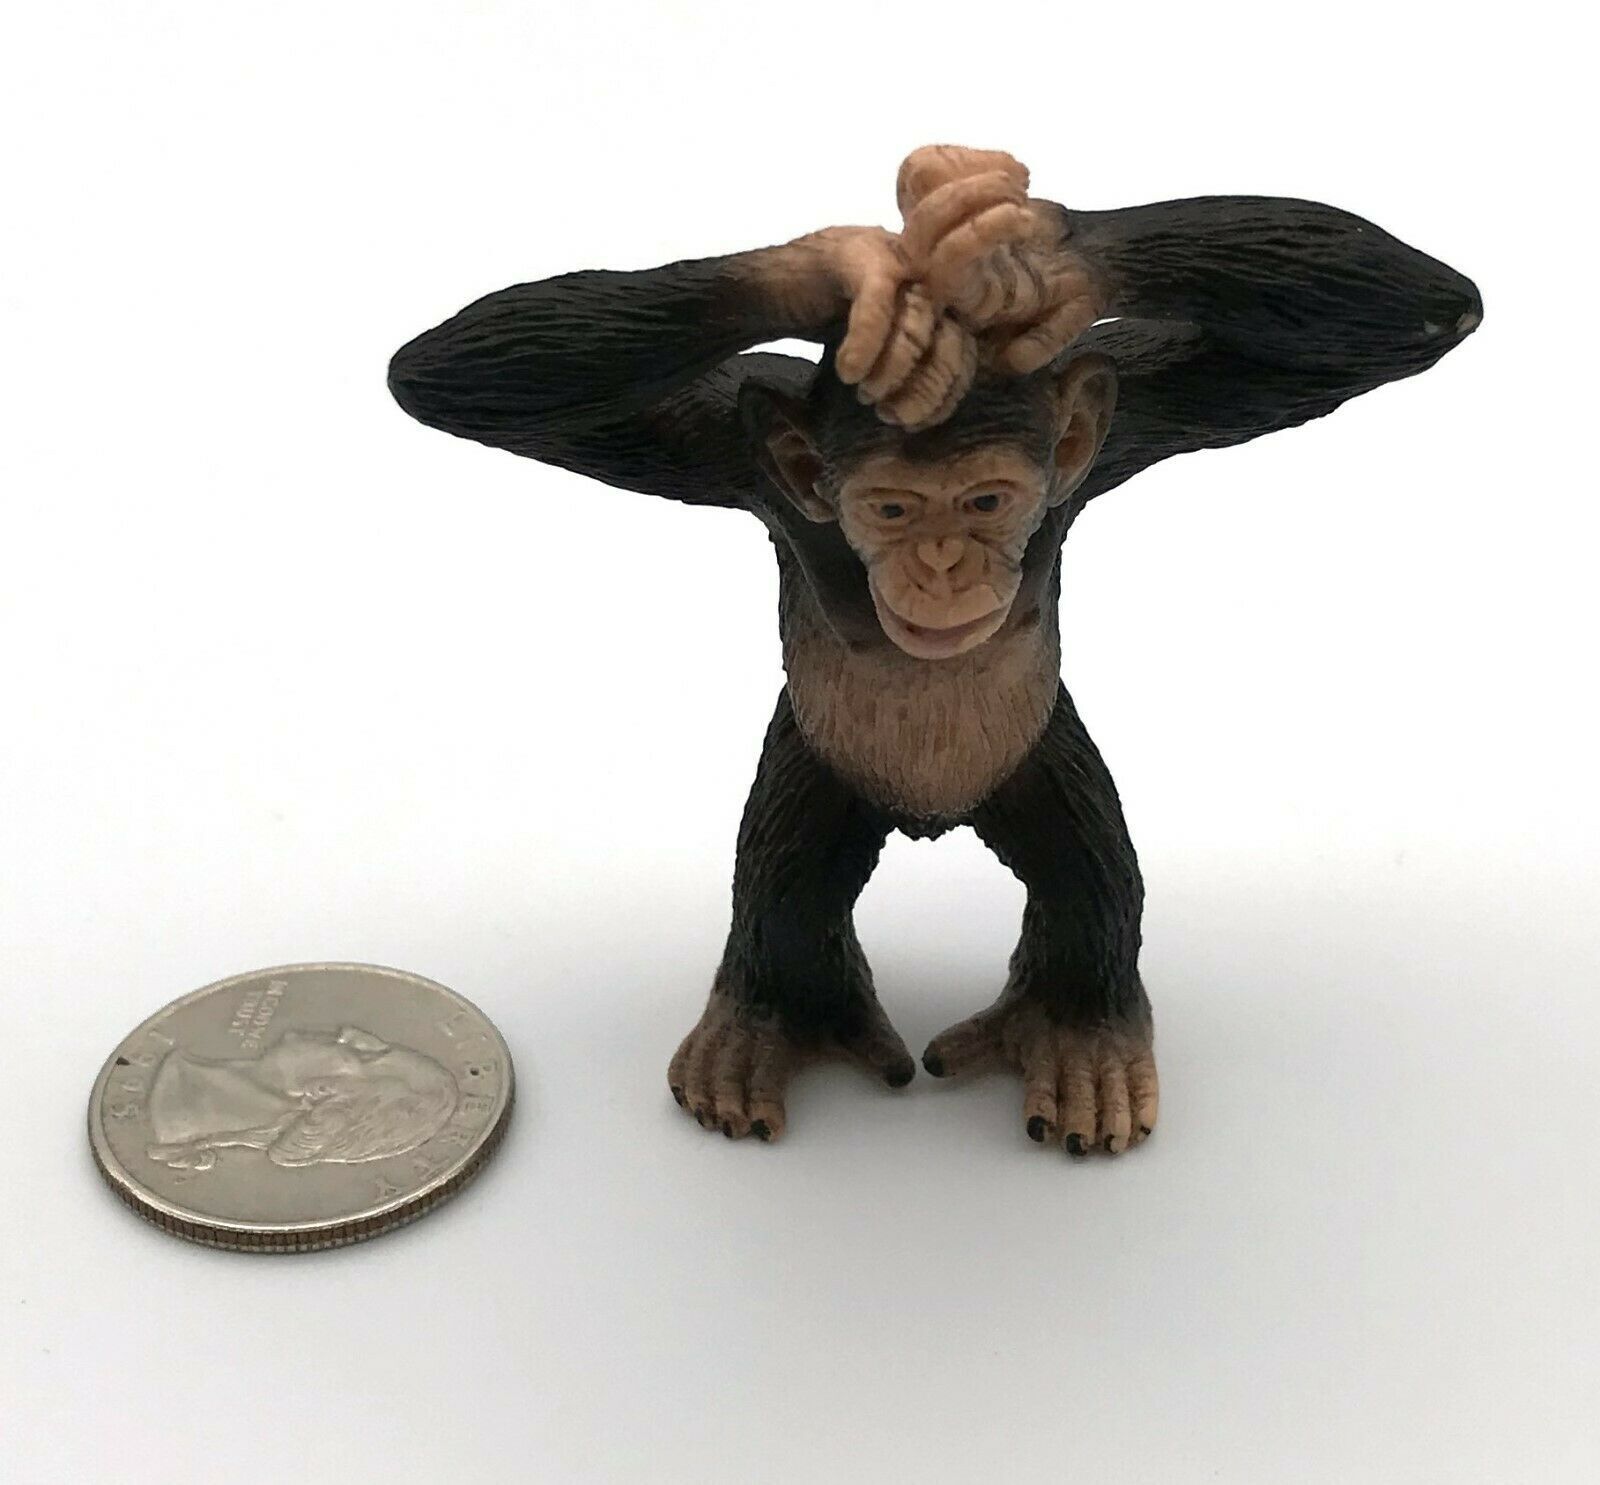 Baby Chimpanzee Gorilla Monkey Cub Toy Figure Figurine Model Sculpture Doll